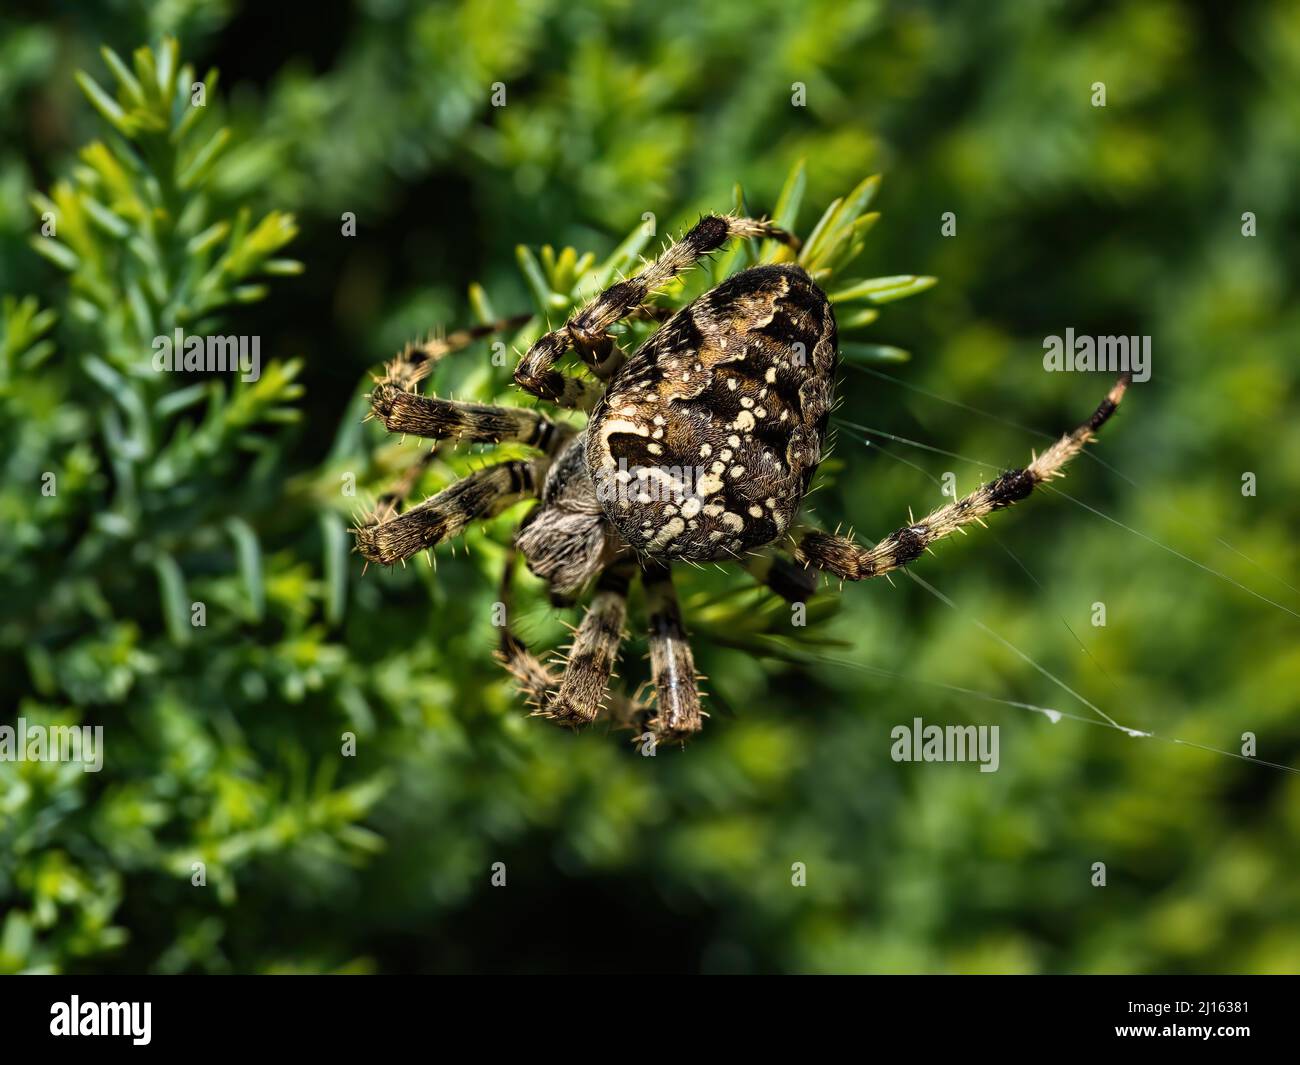 A European garden spider on a plant in the sun Stock Photo